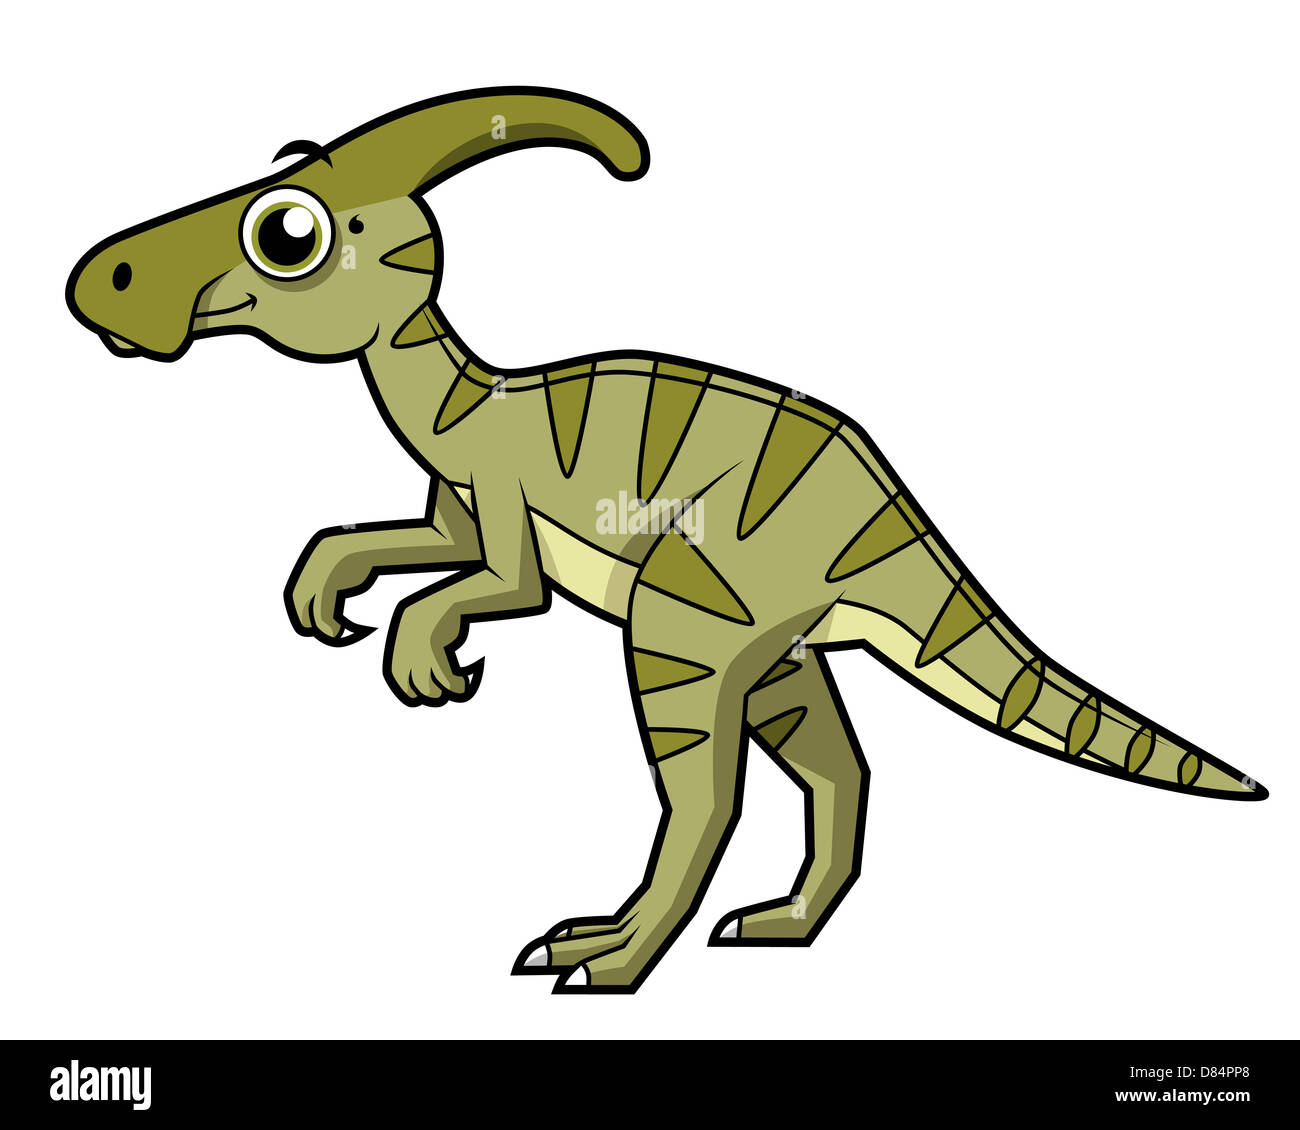 Cute illustration of a Parasaurolophus dinosaur. Stock Photo